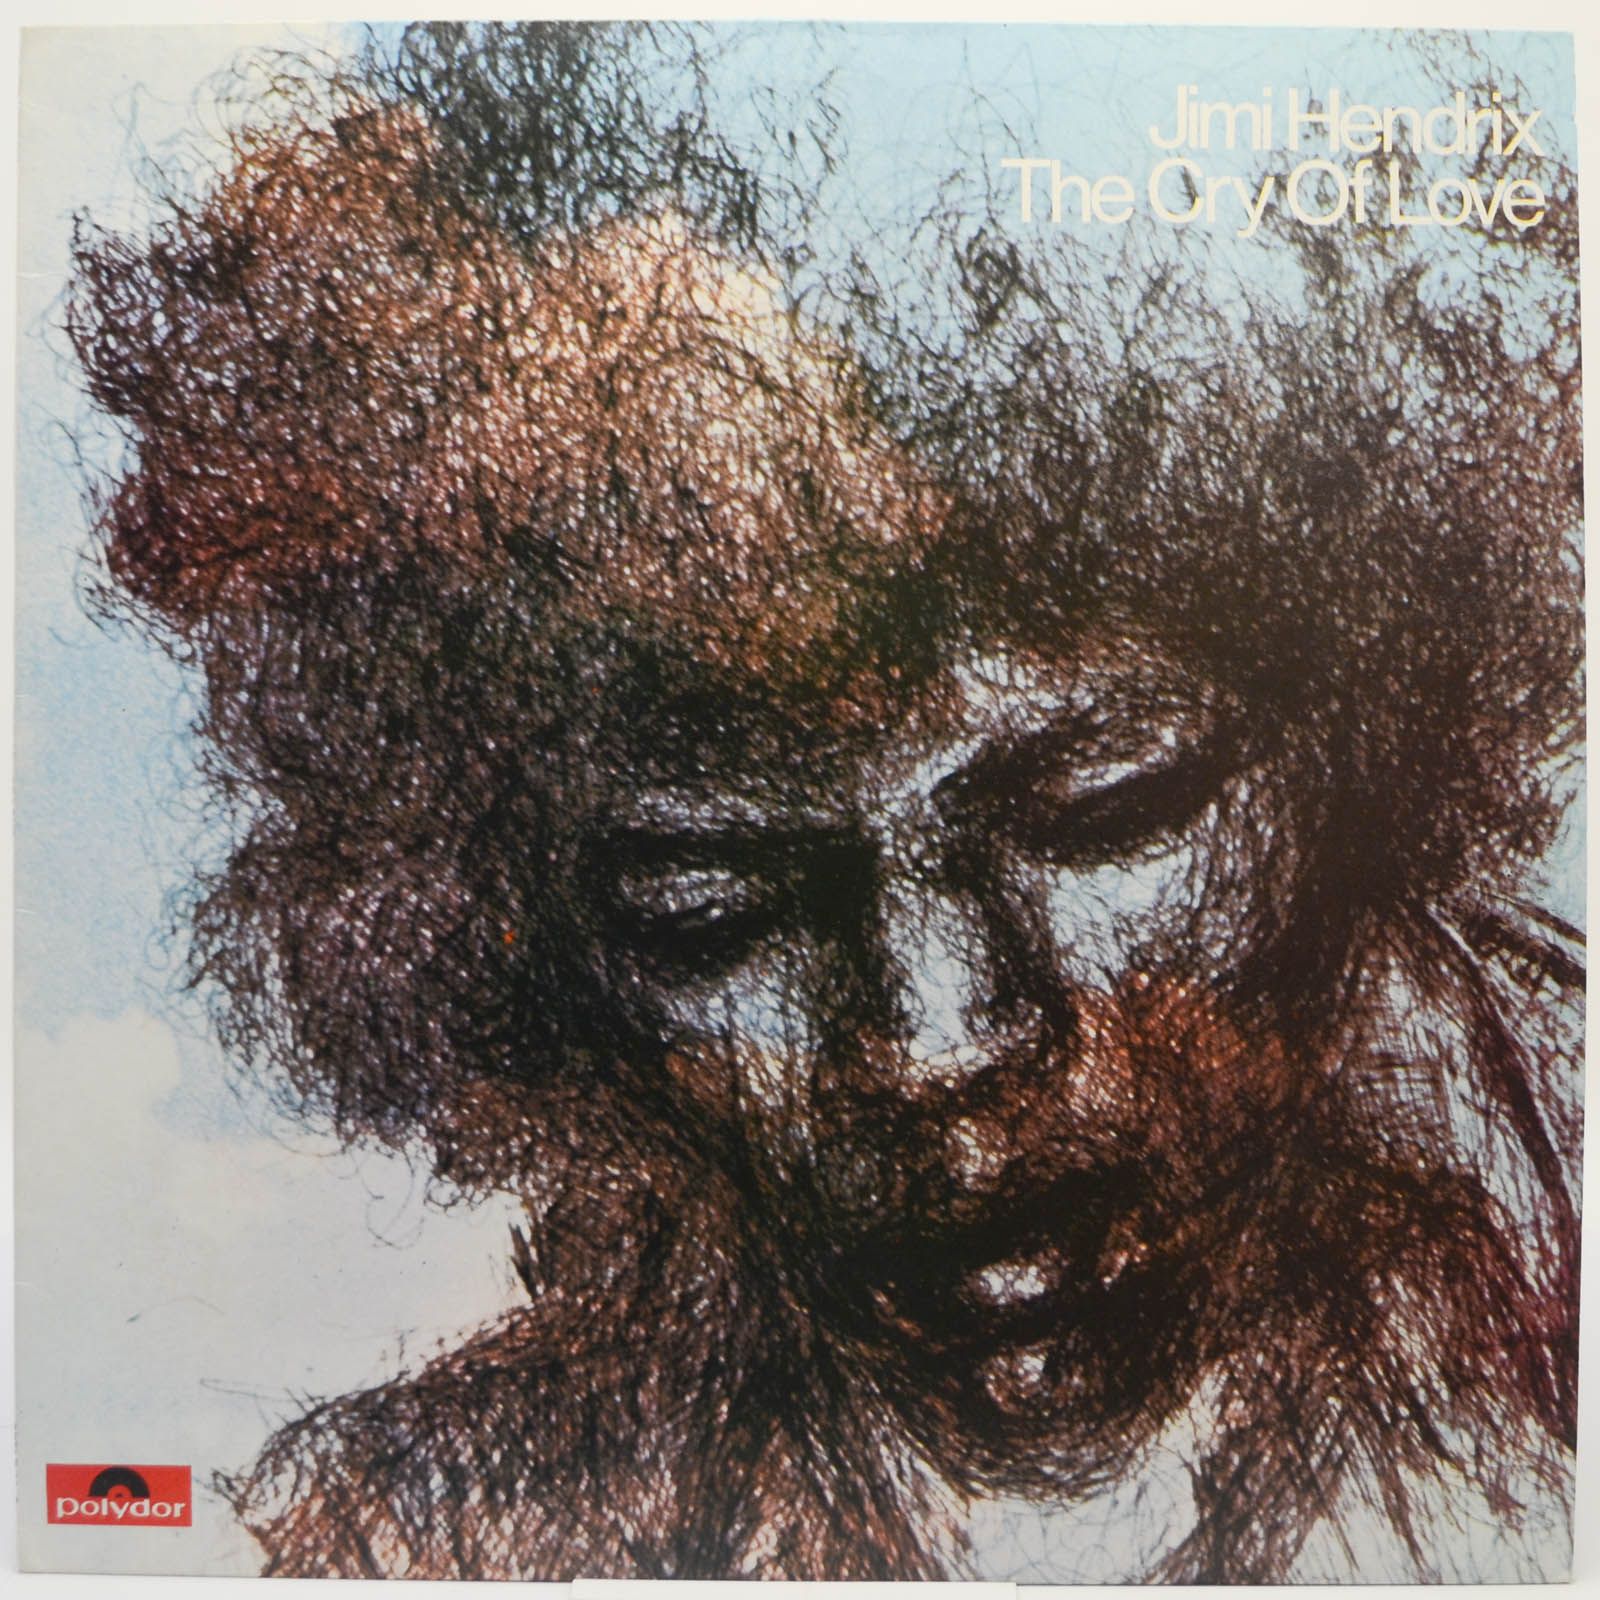 Jimi Hendrix — The Cry Of Love (UK), 1971